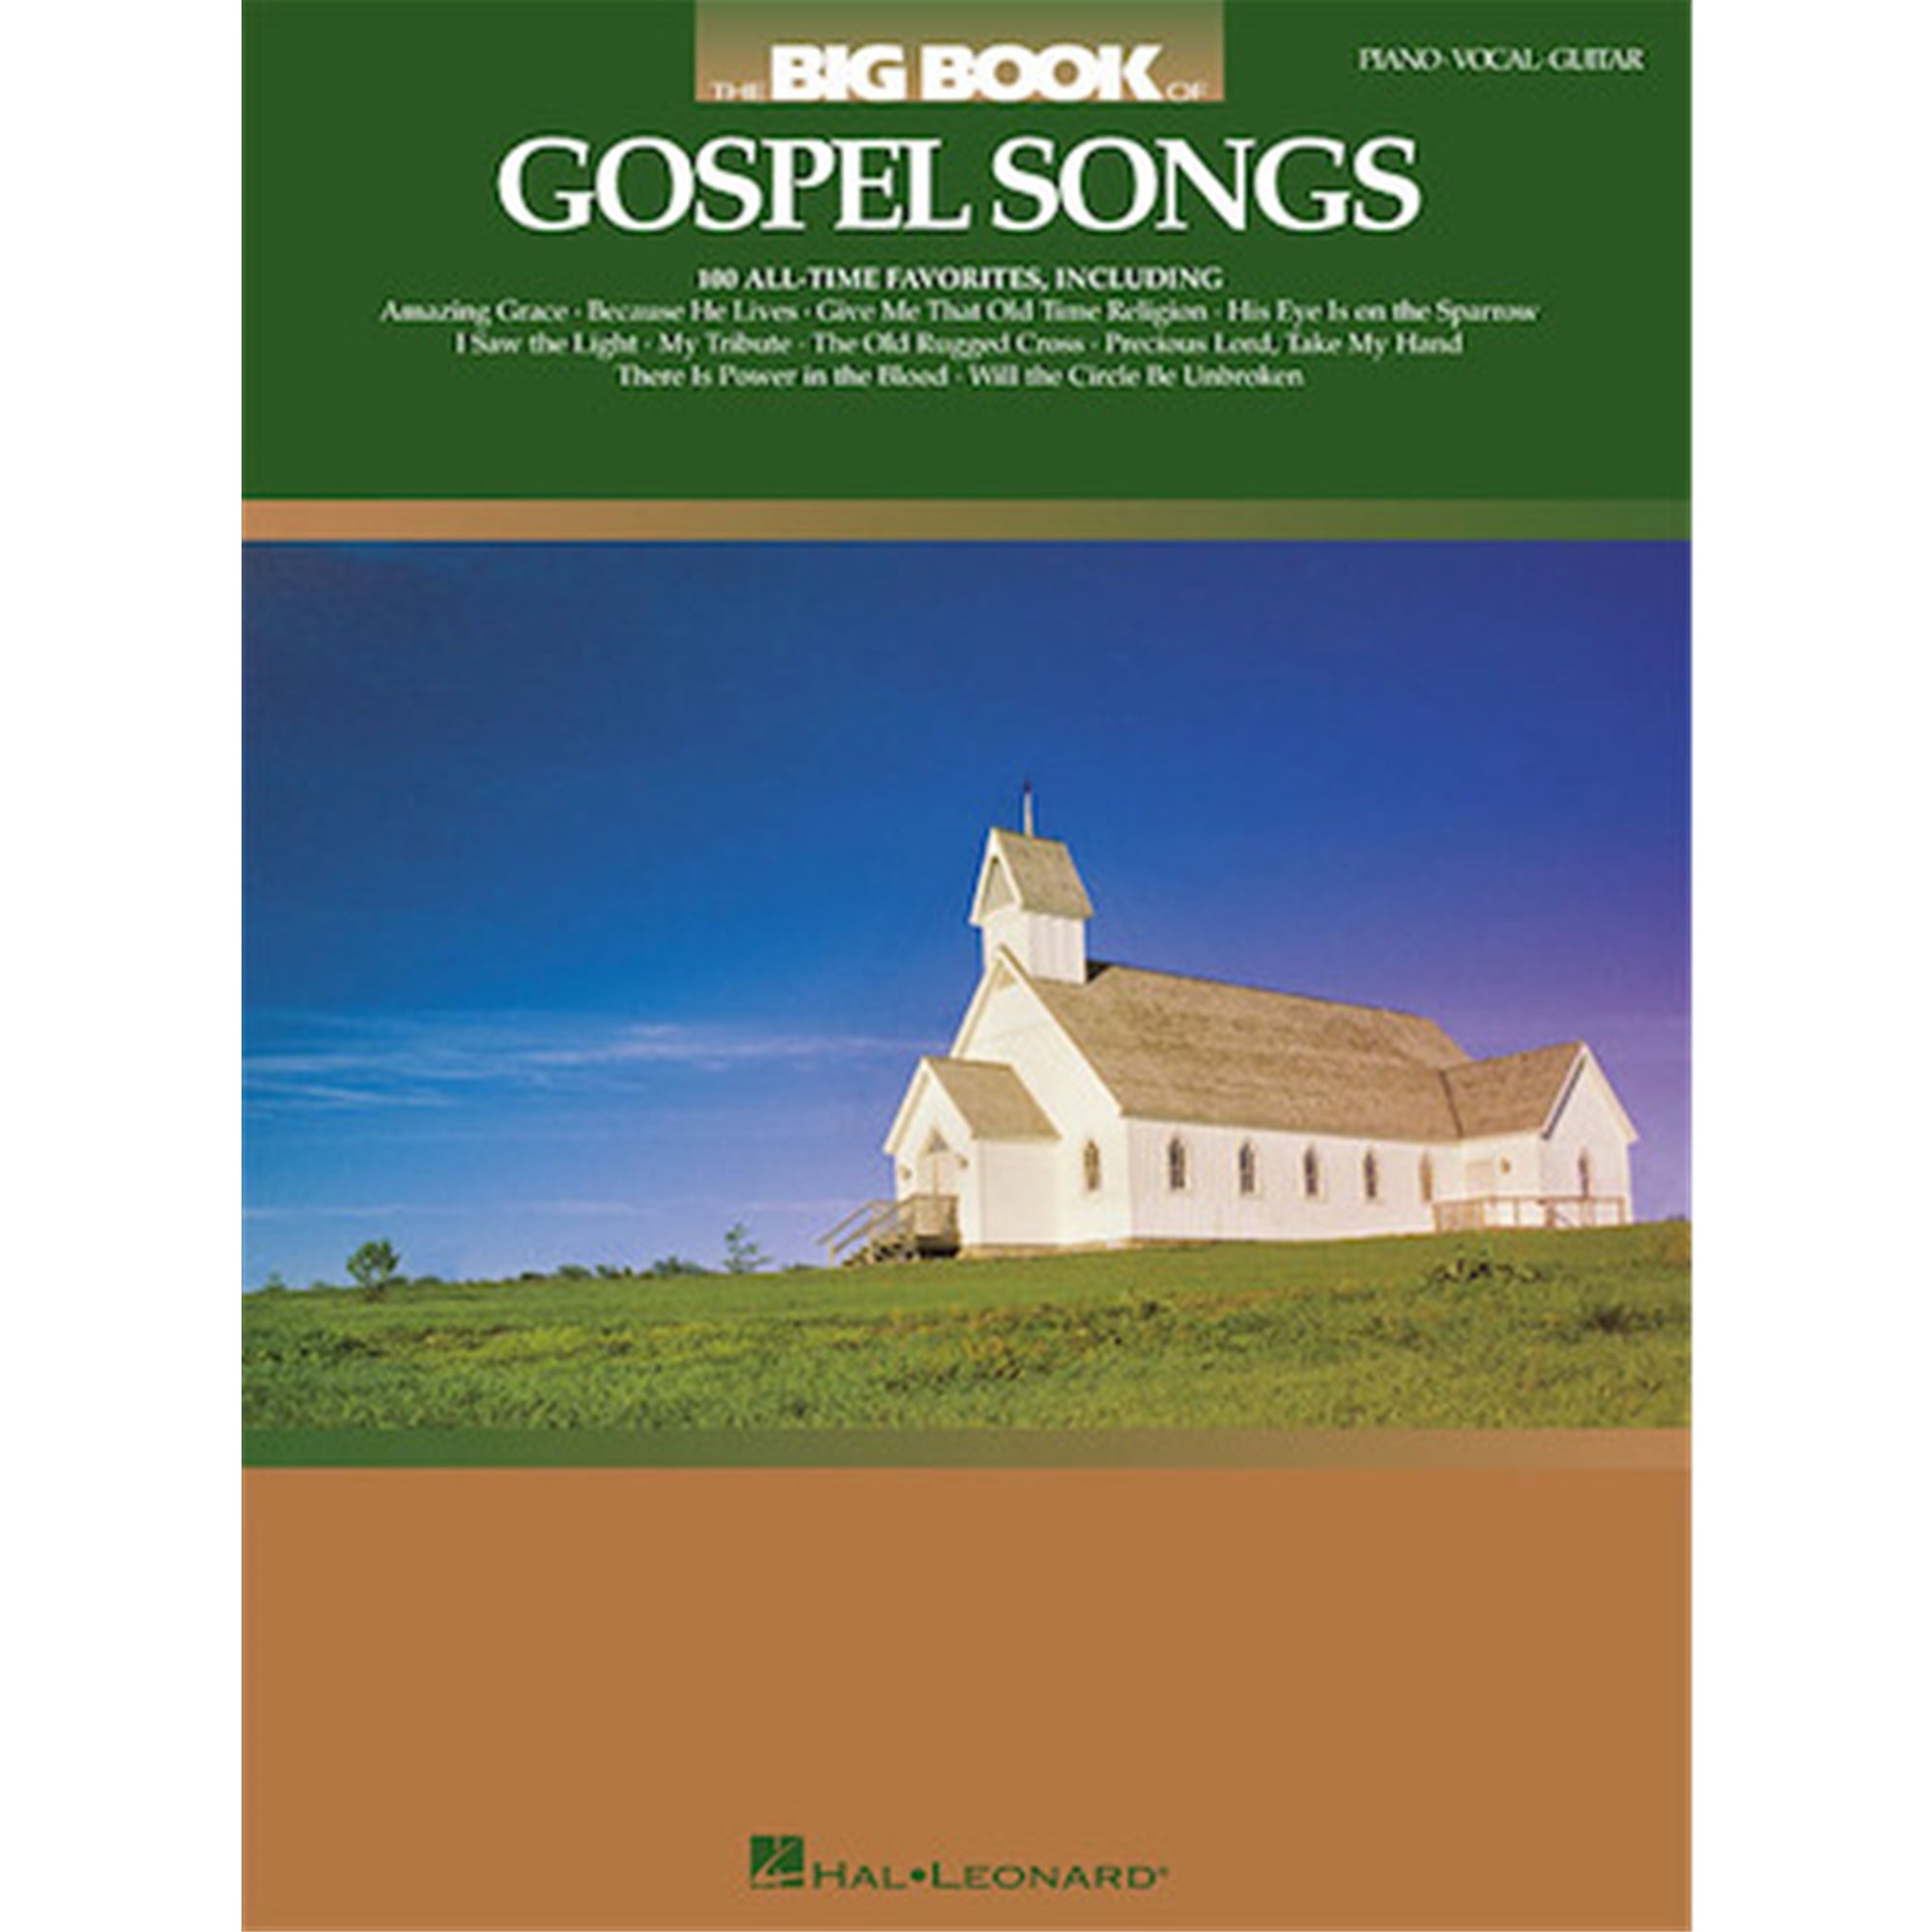 HAL LEONARD 310604 The Big Book of Gospel Songs